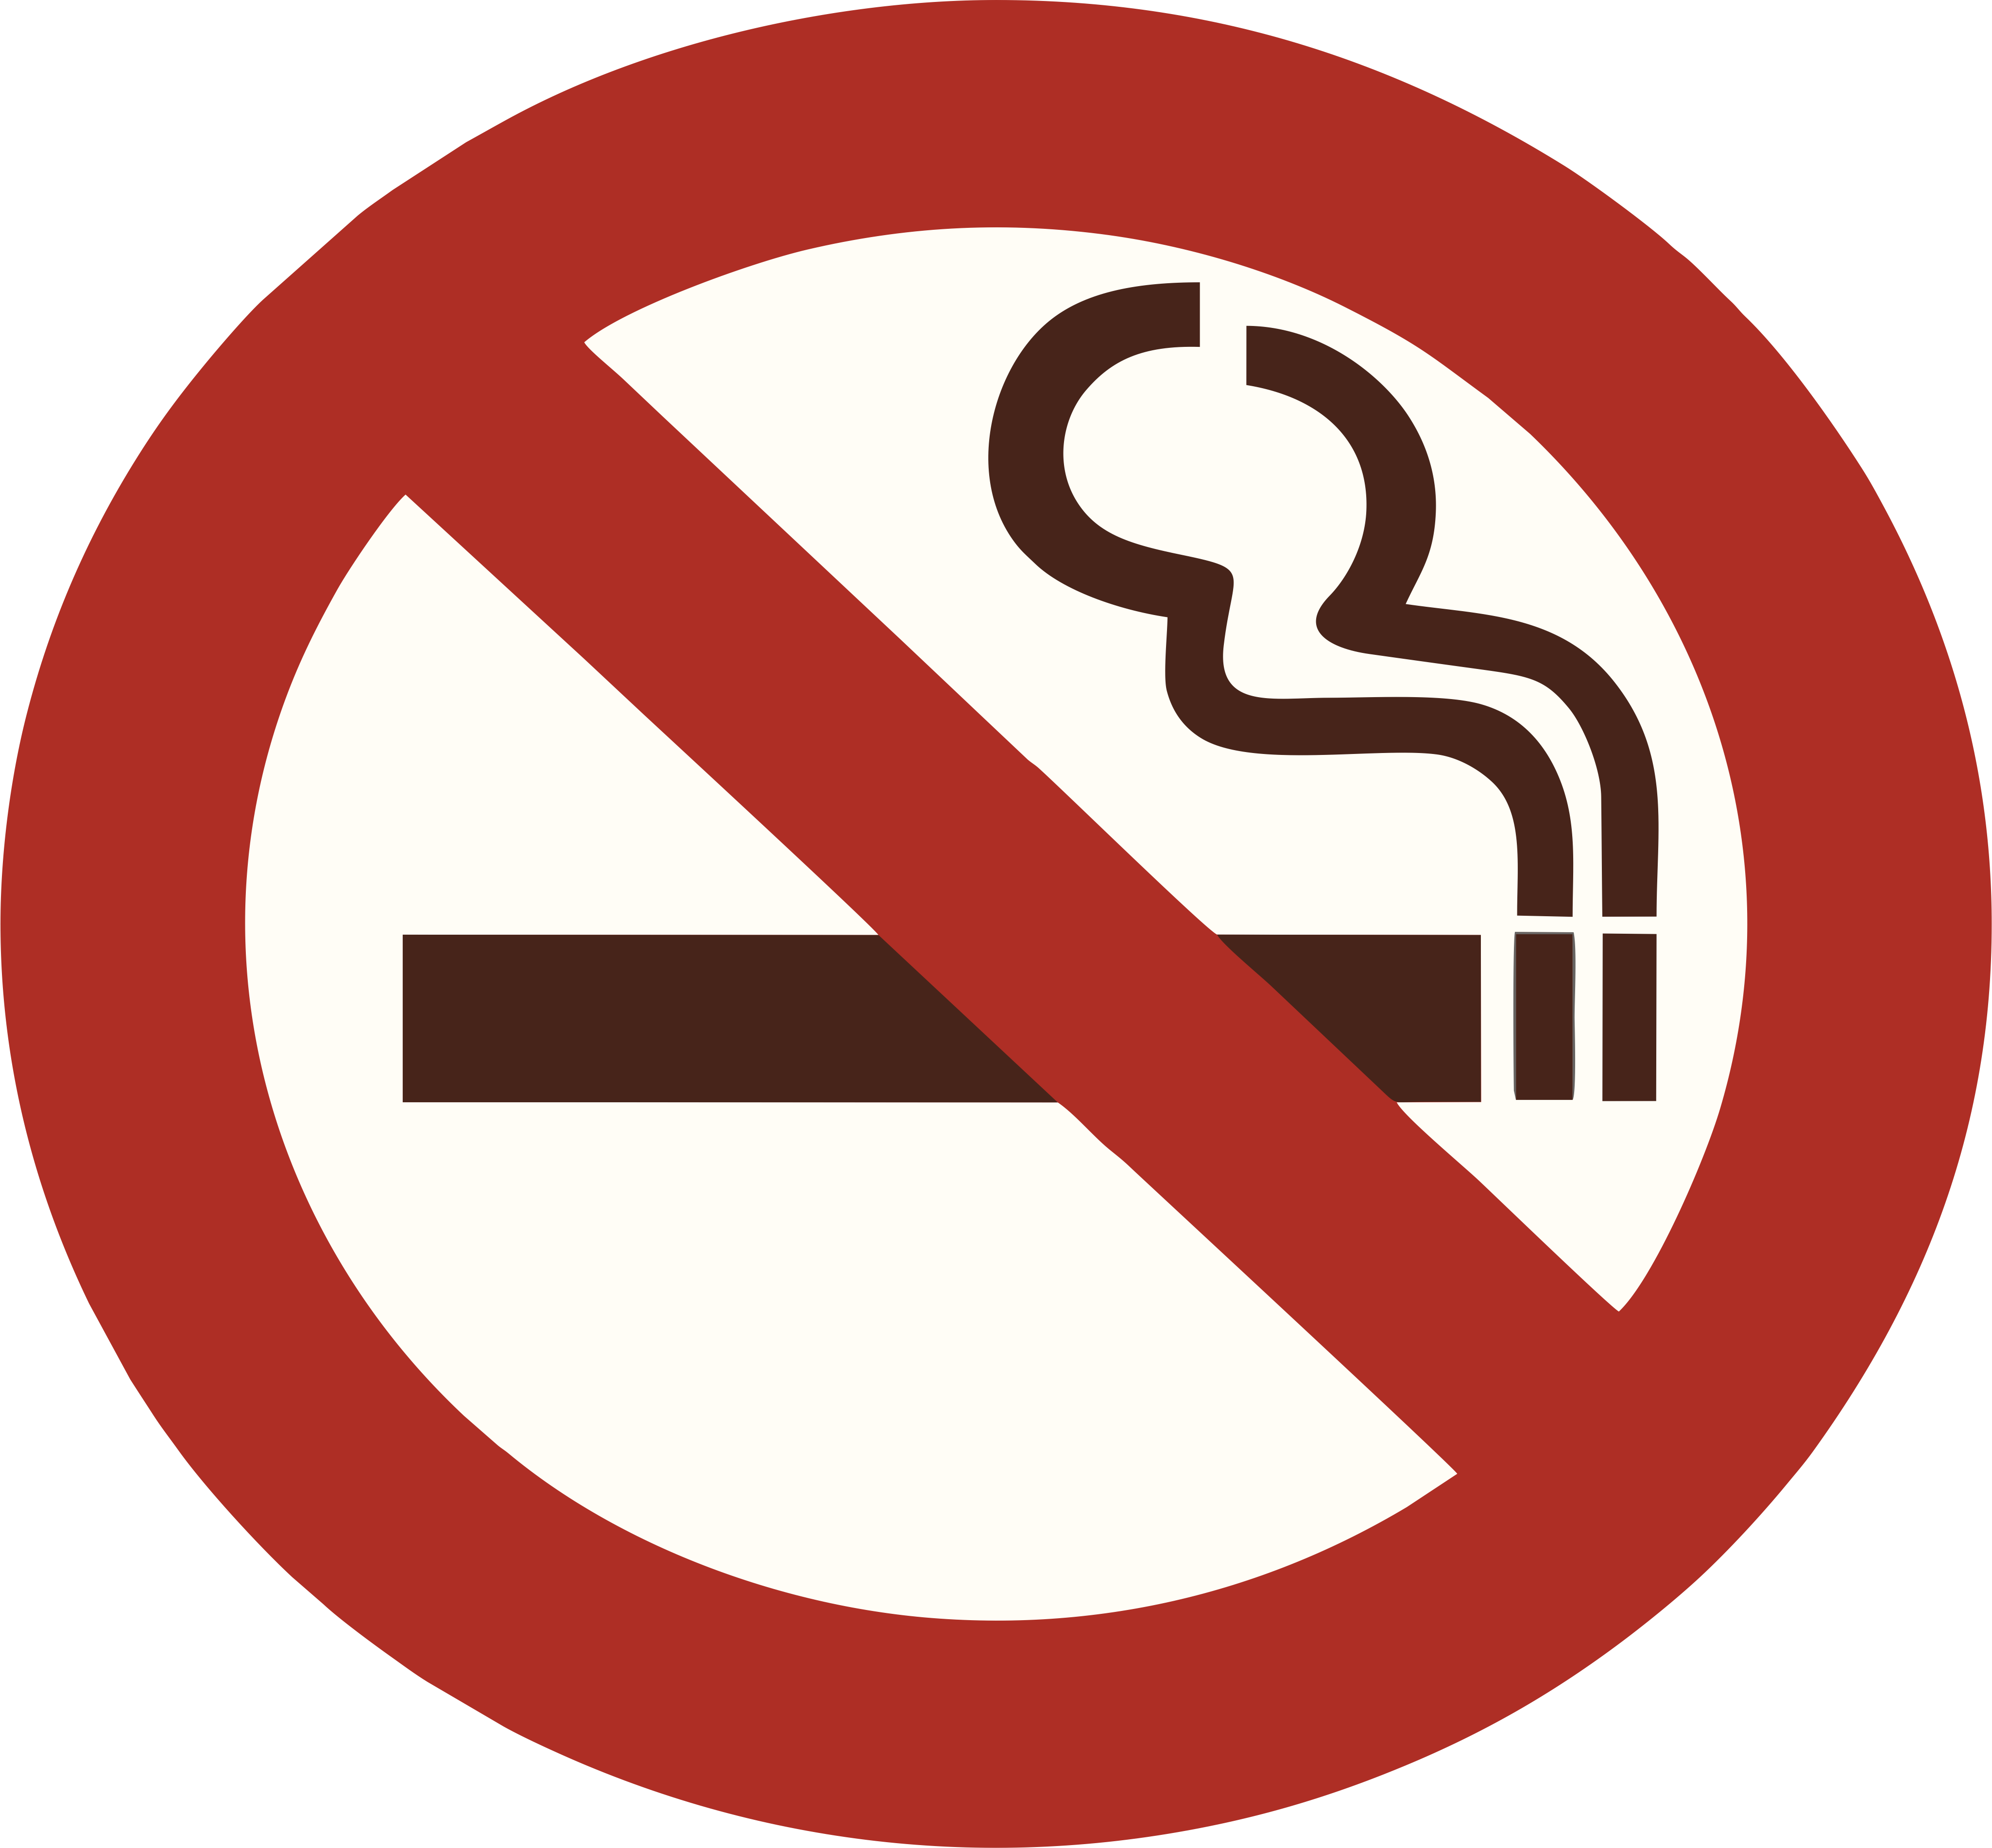 Interdiction de fumer. Risque d'incendie